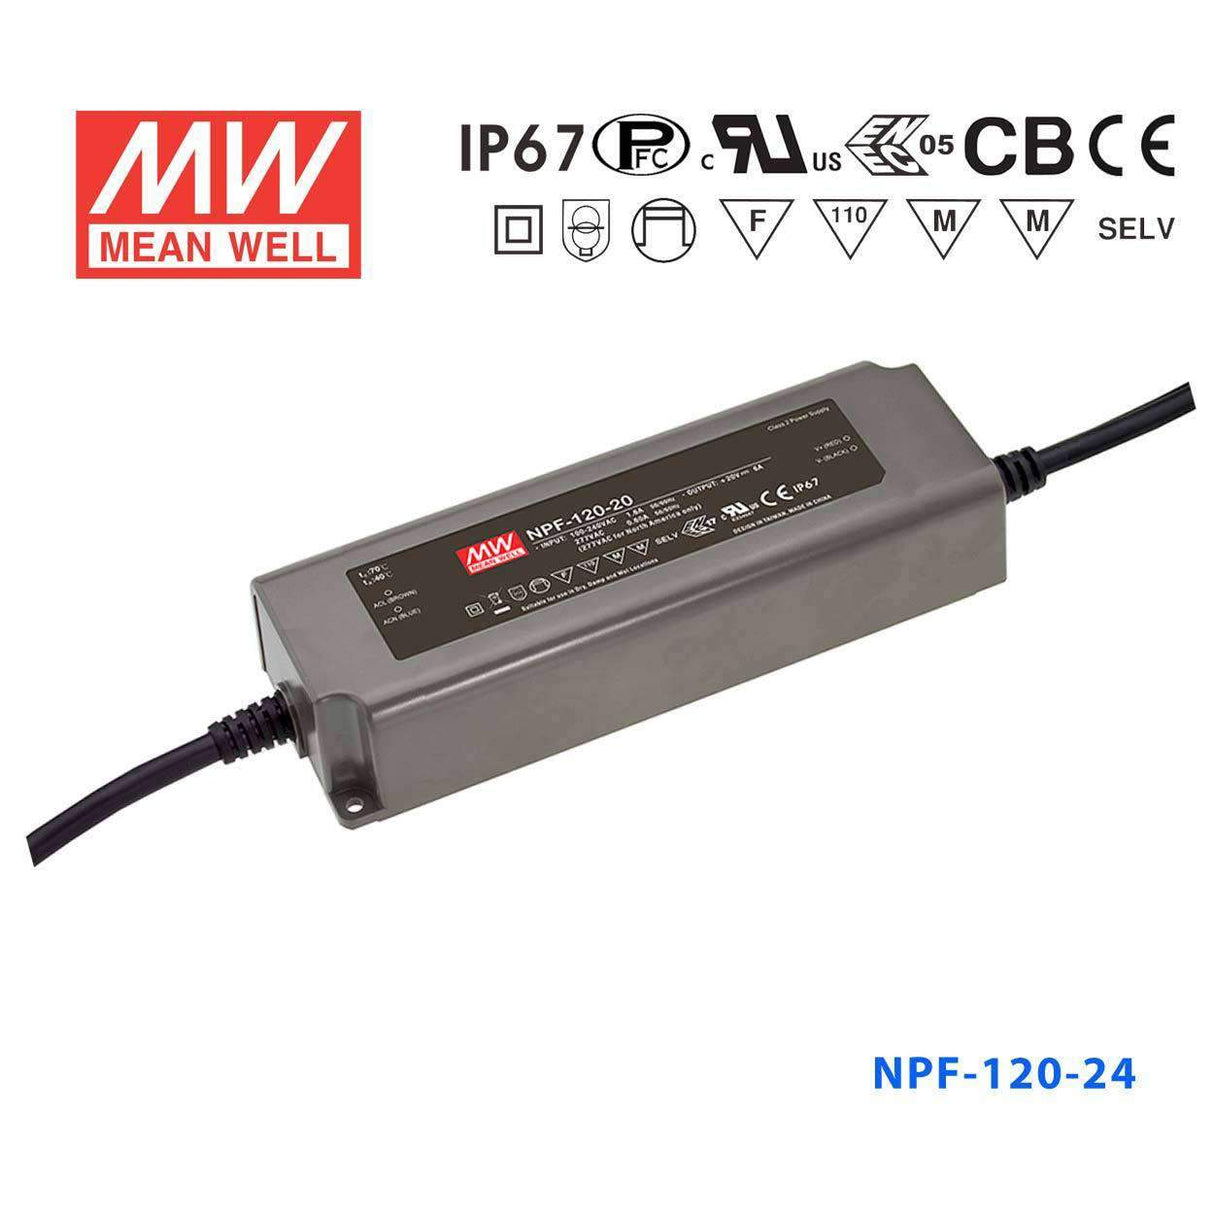 Mean Well NPF-120-24 Power Supply 120W 24V